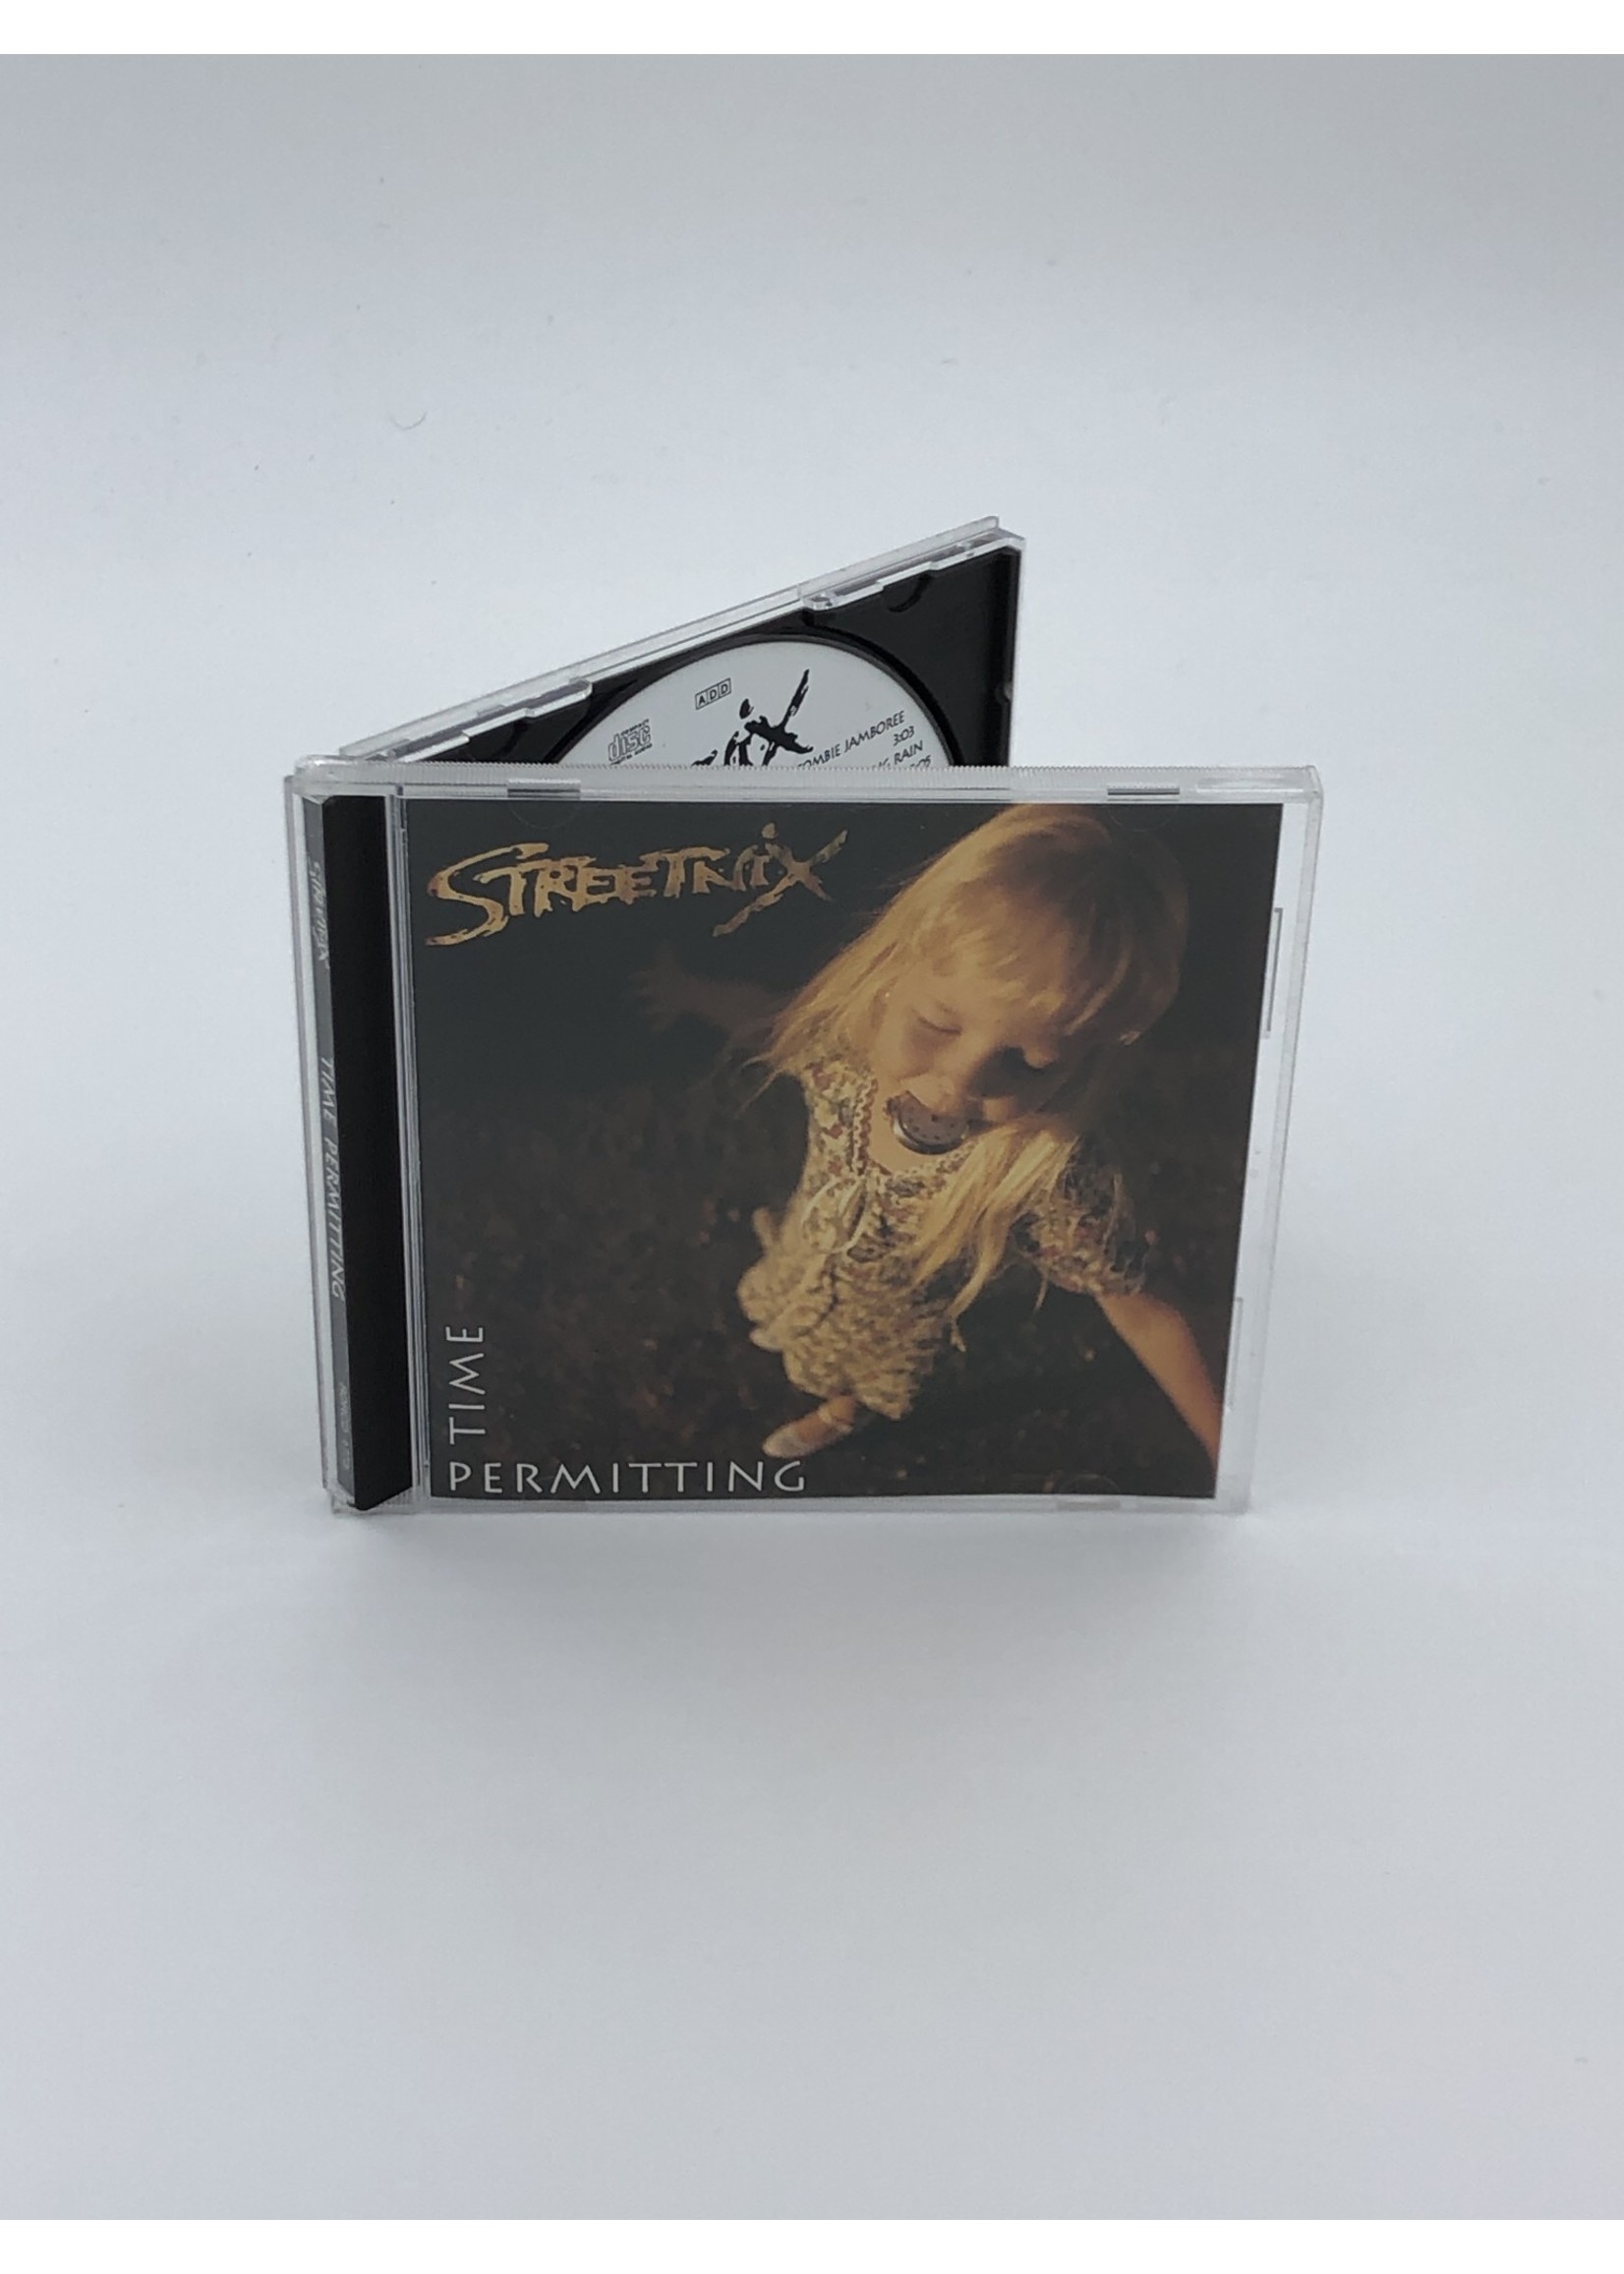 CD Streetnix: Time Permitting CD